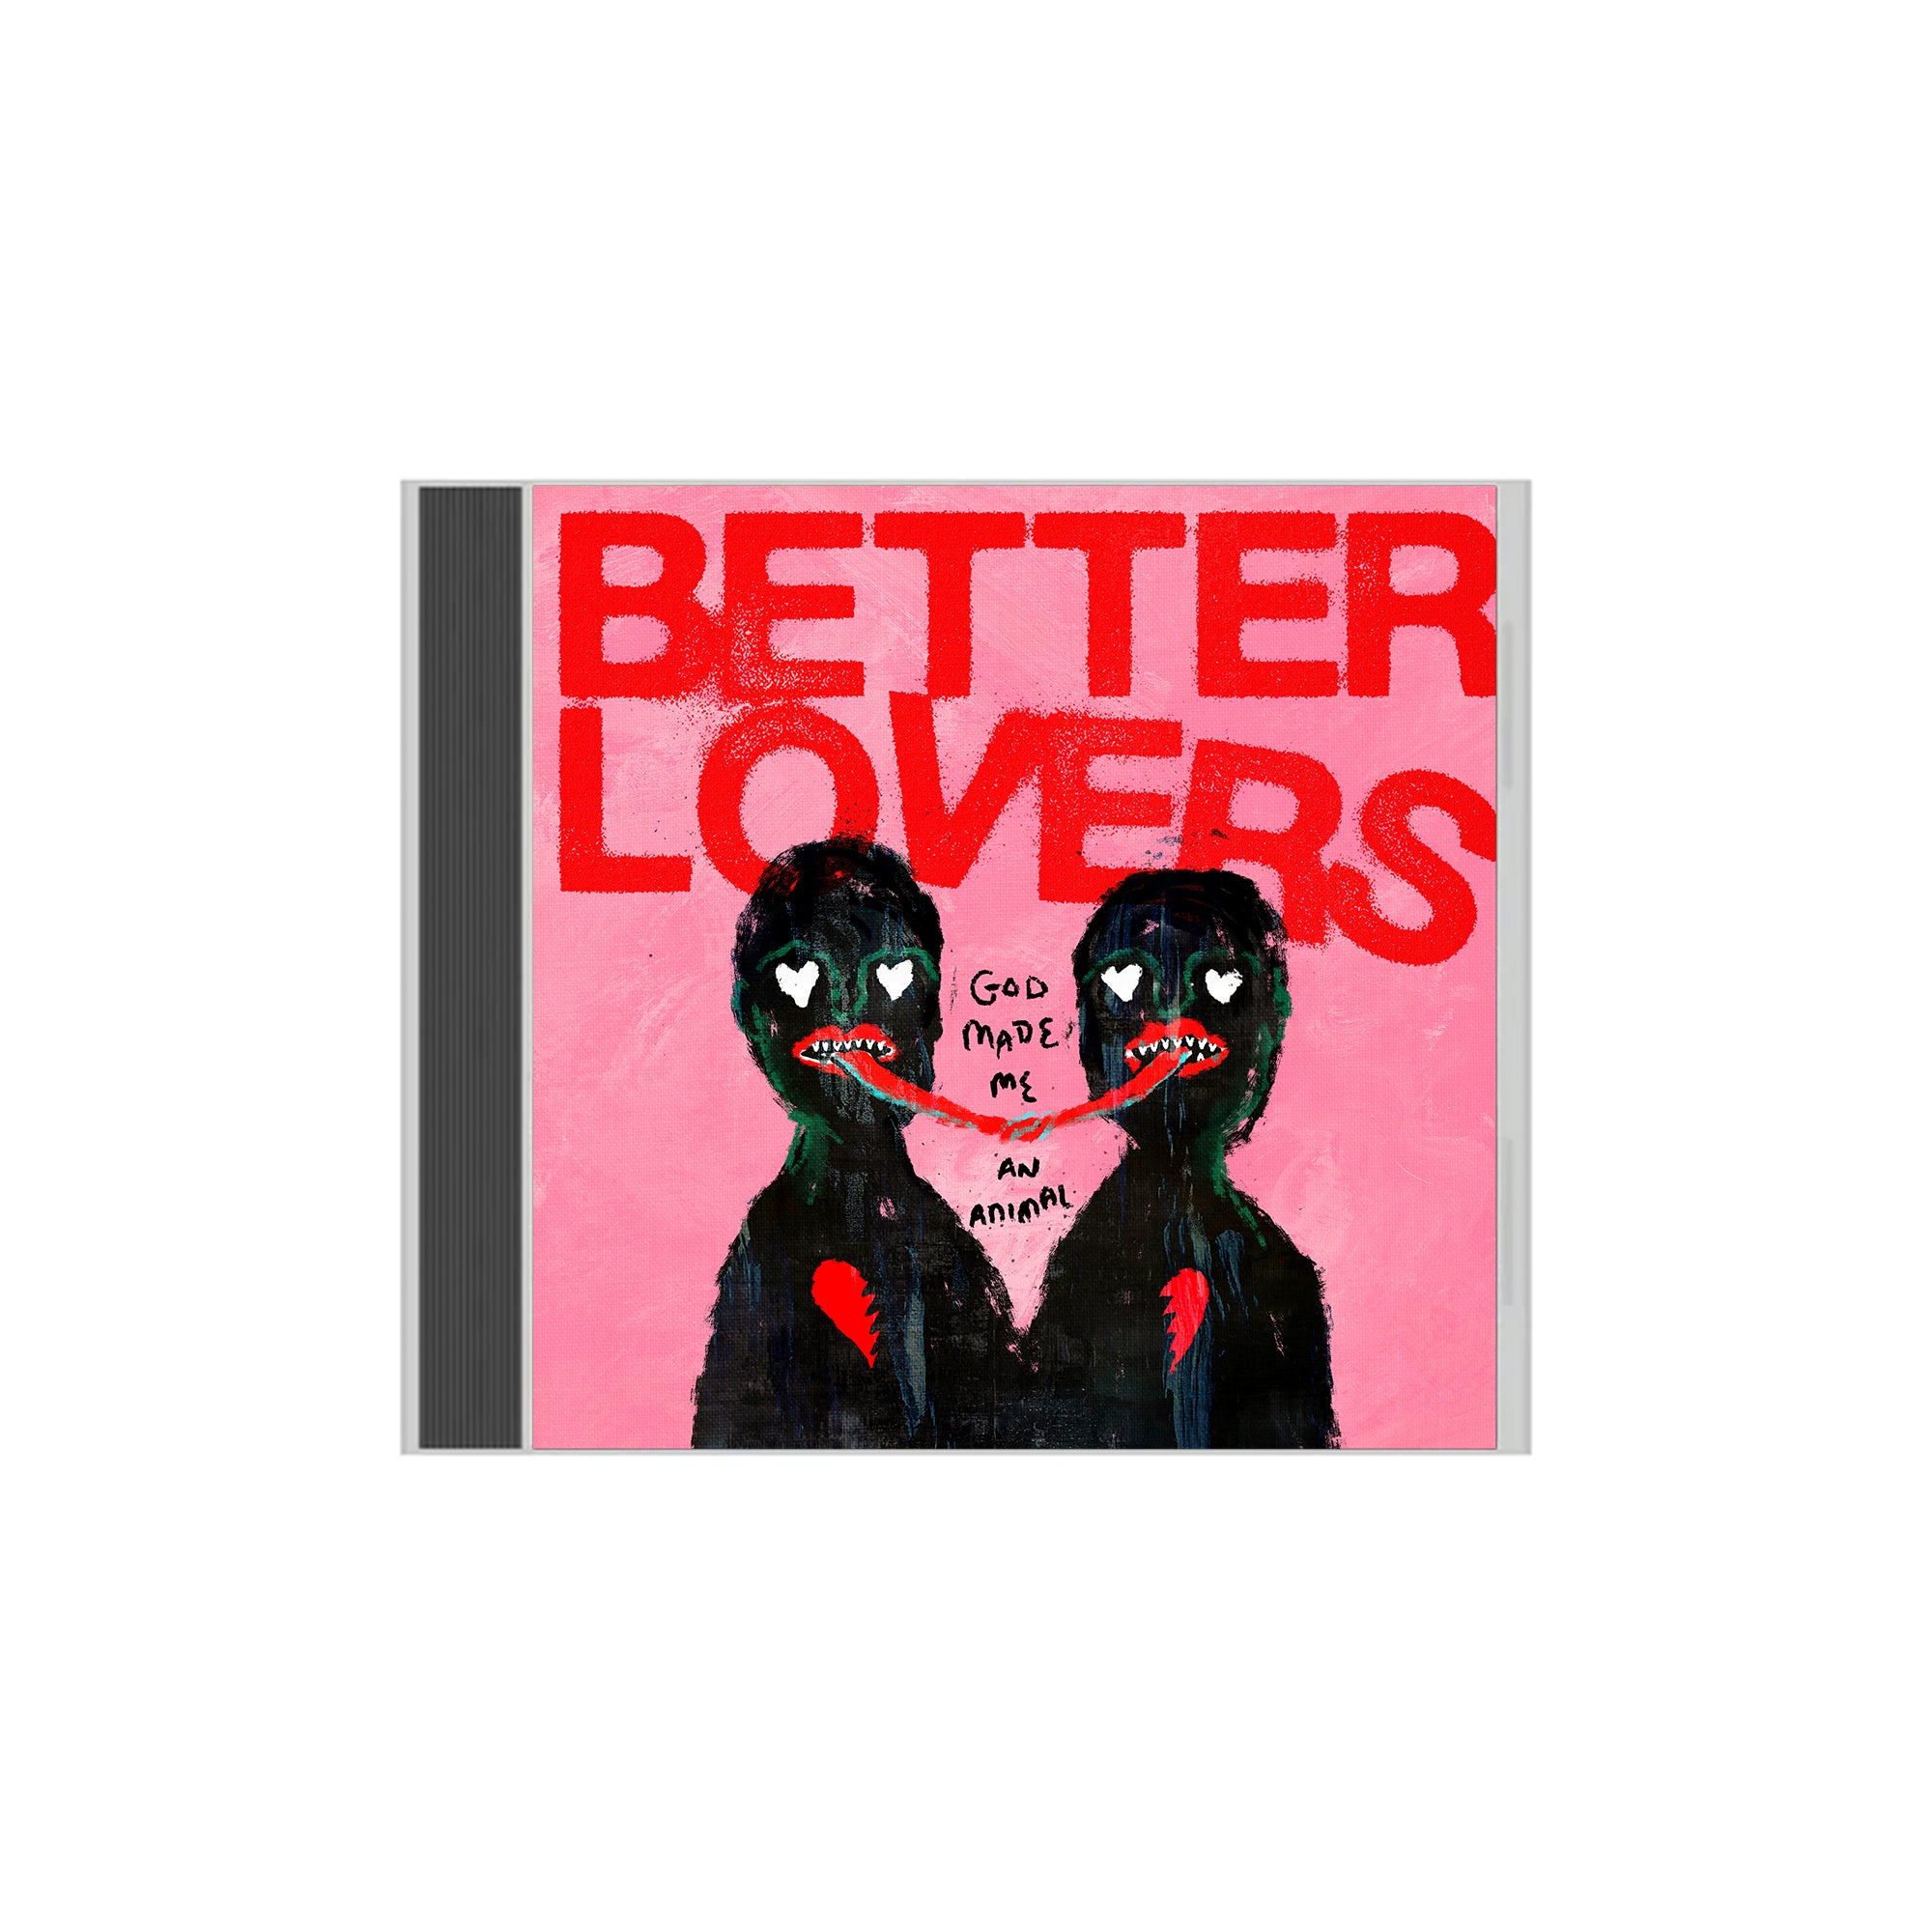 Better Lovers - 'God Made Me An Animal' CD